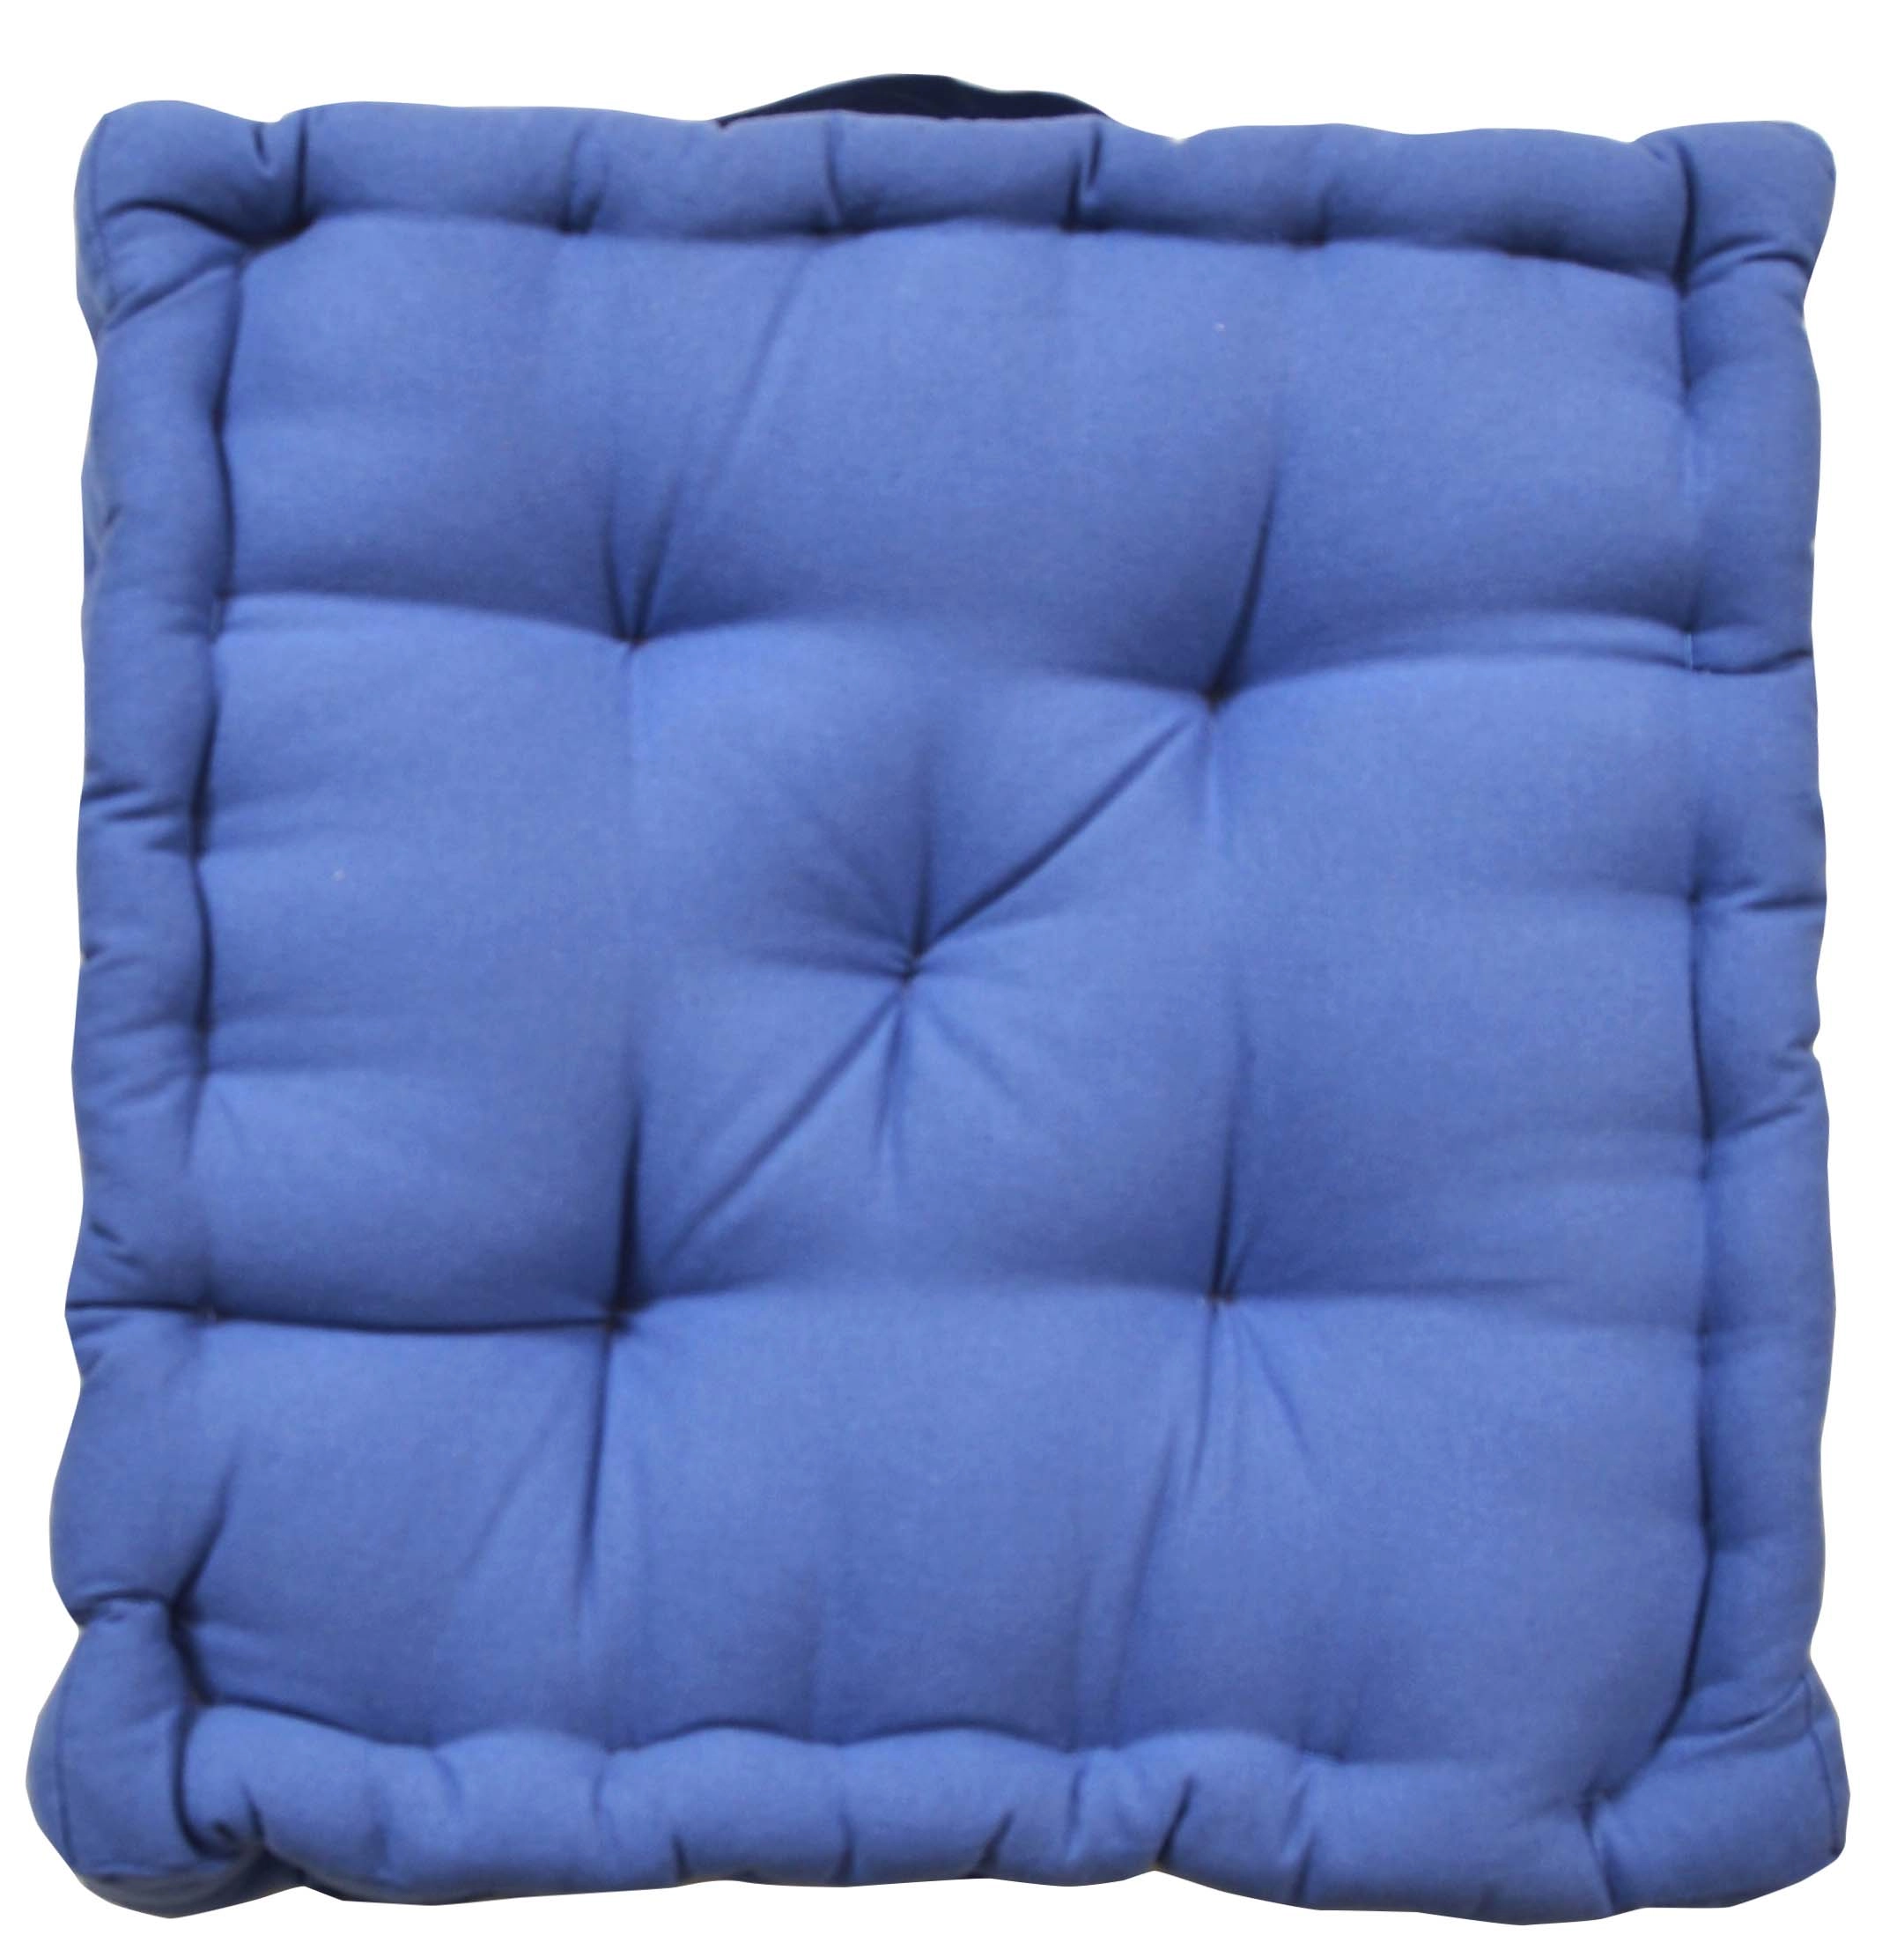 Cuscino da pavimento Futon colore blu navy 40x40 cm